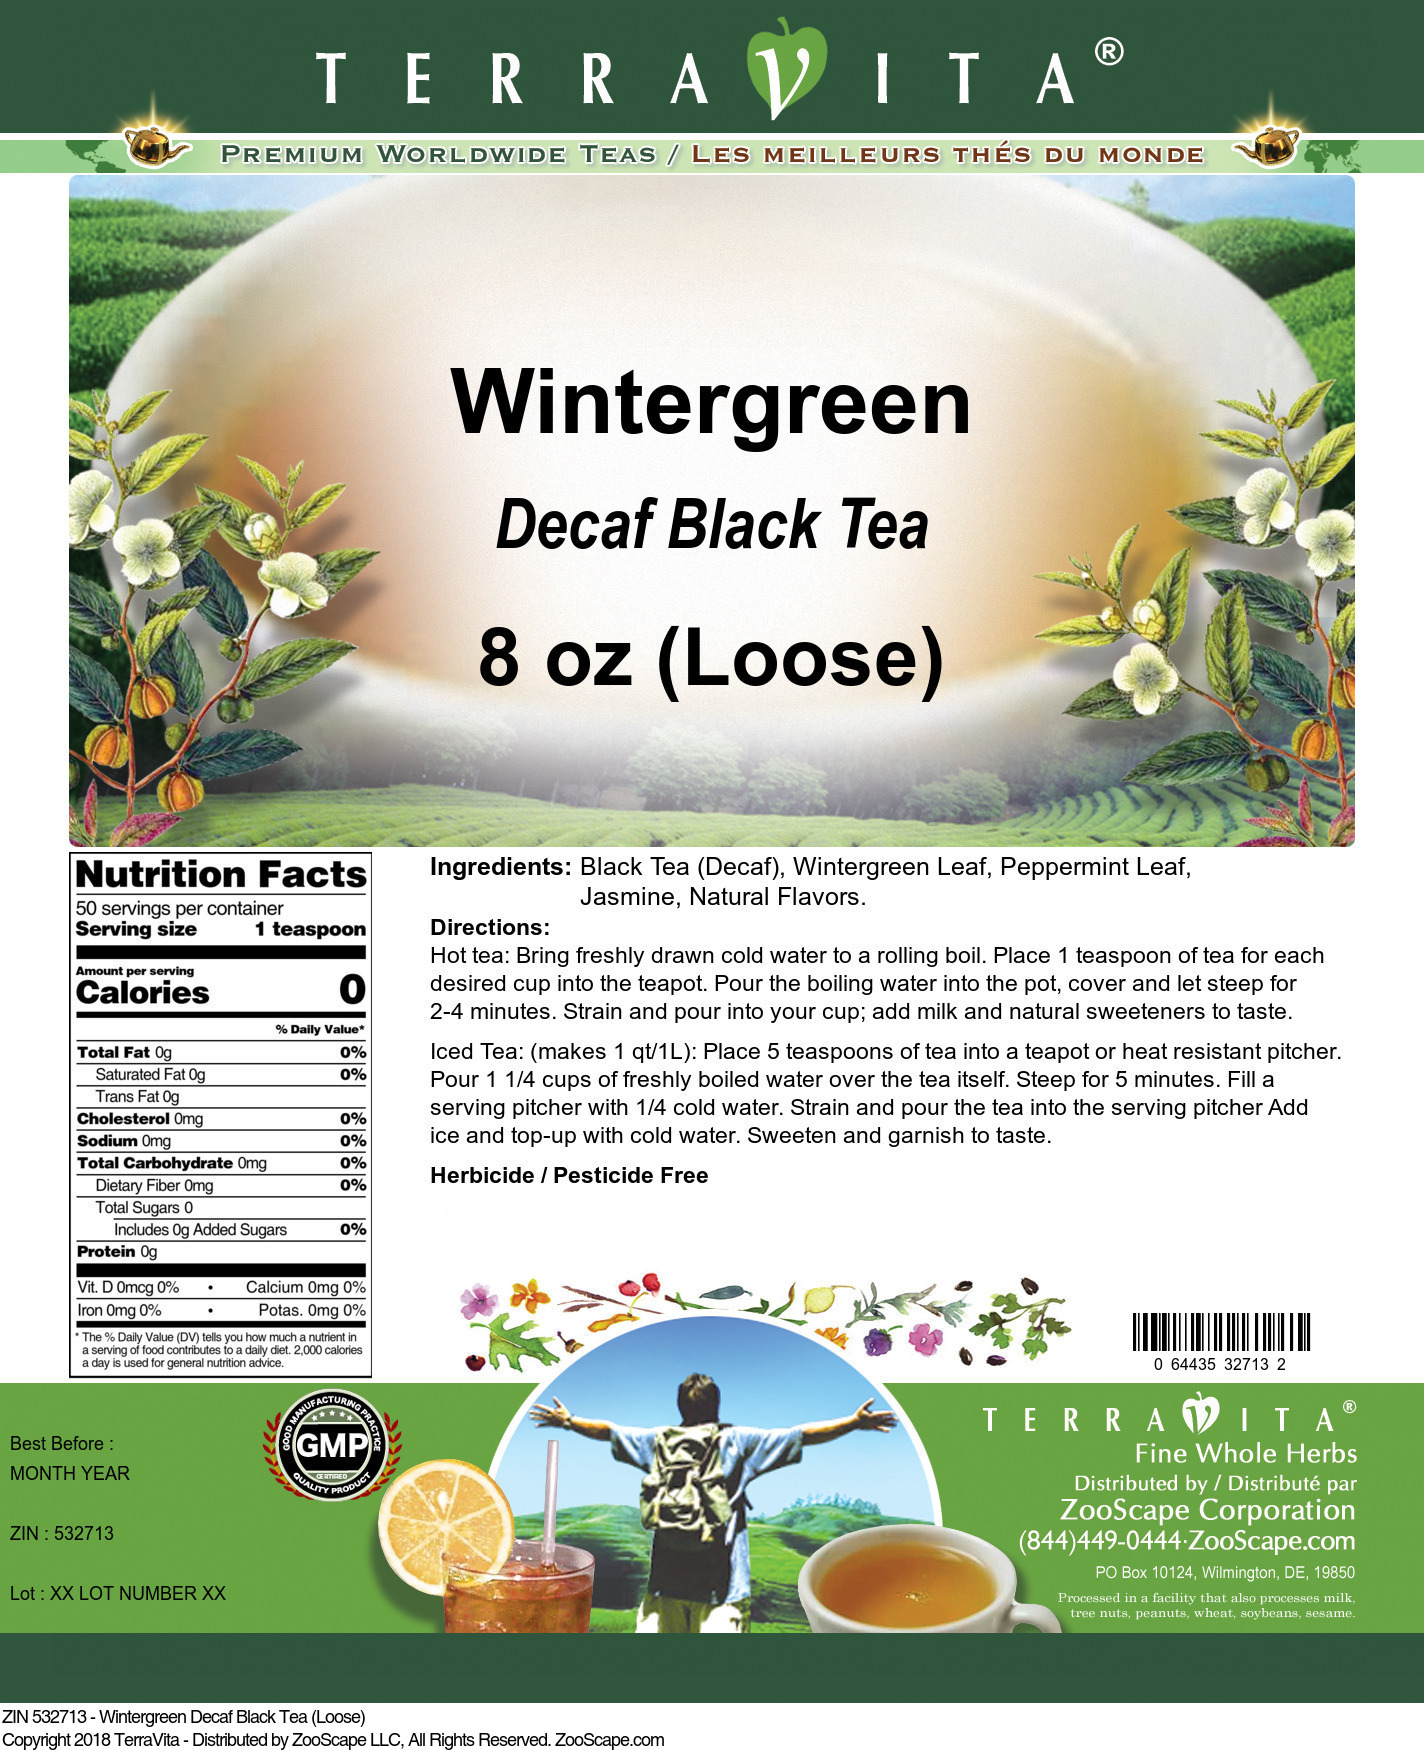 Wintergreen Decaf Black Tea (Loose) - Label